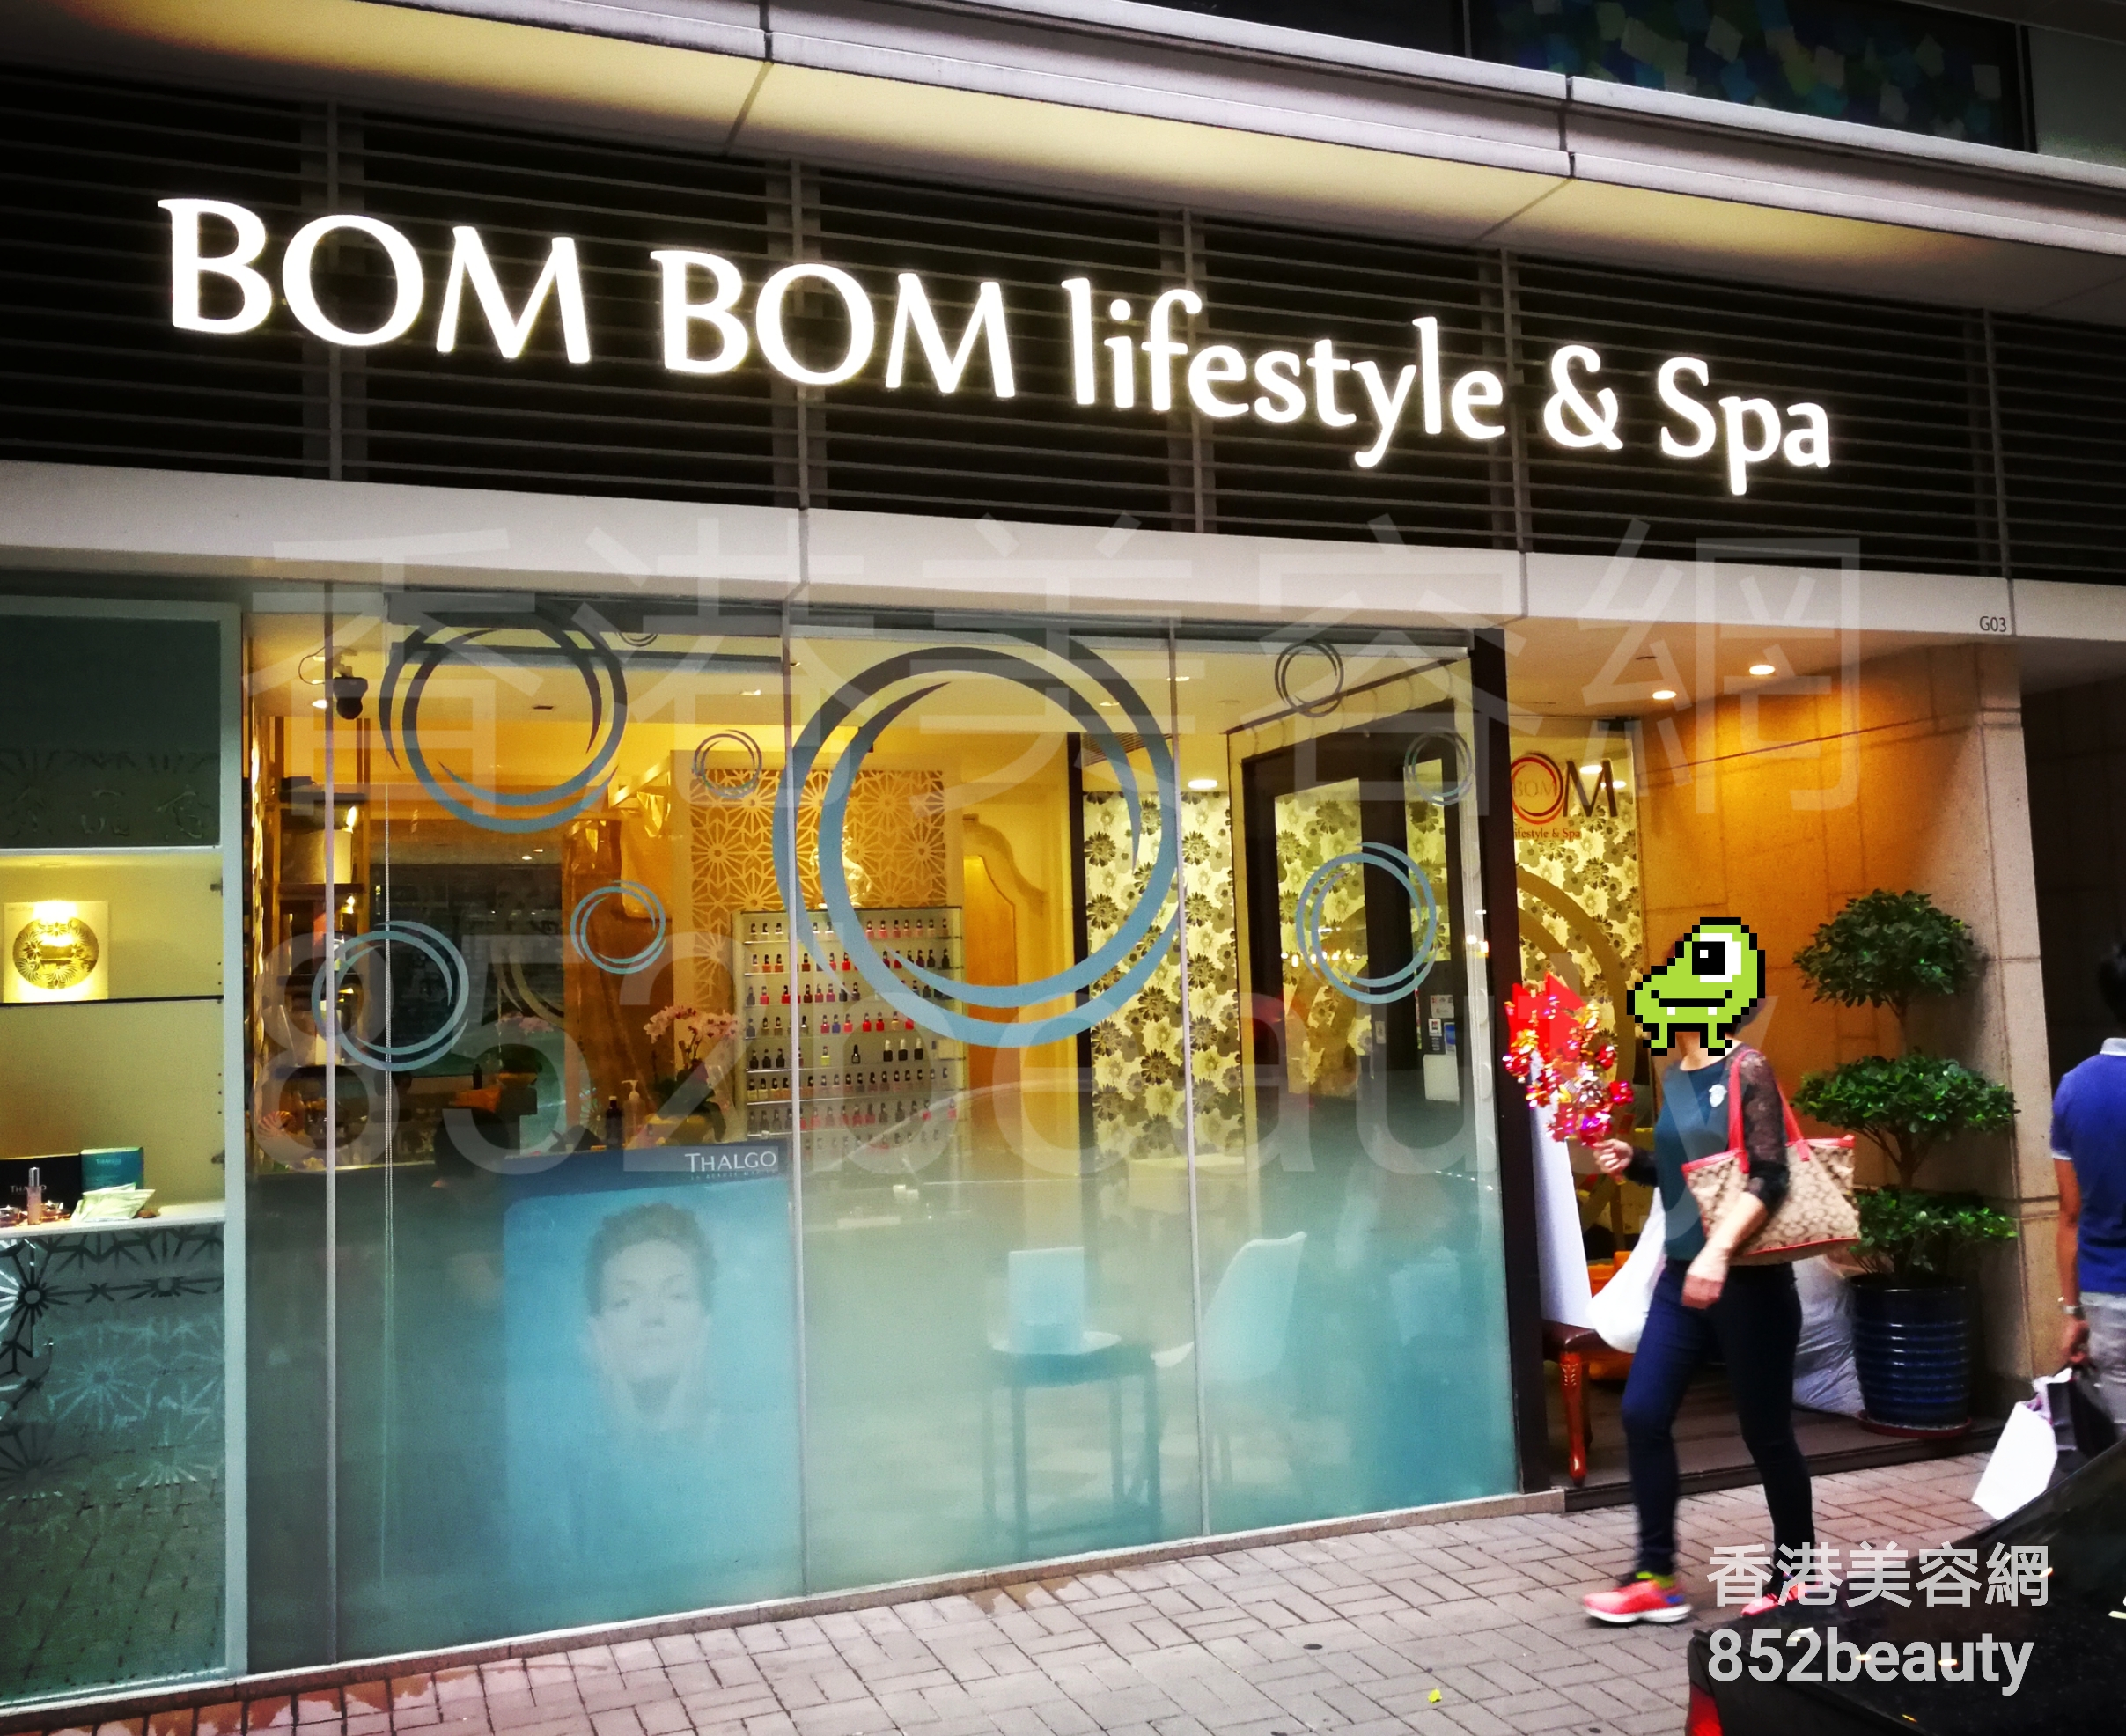 美容院 / 美容师: BOM BOM lifestyle & Spa